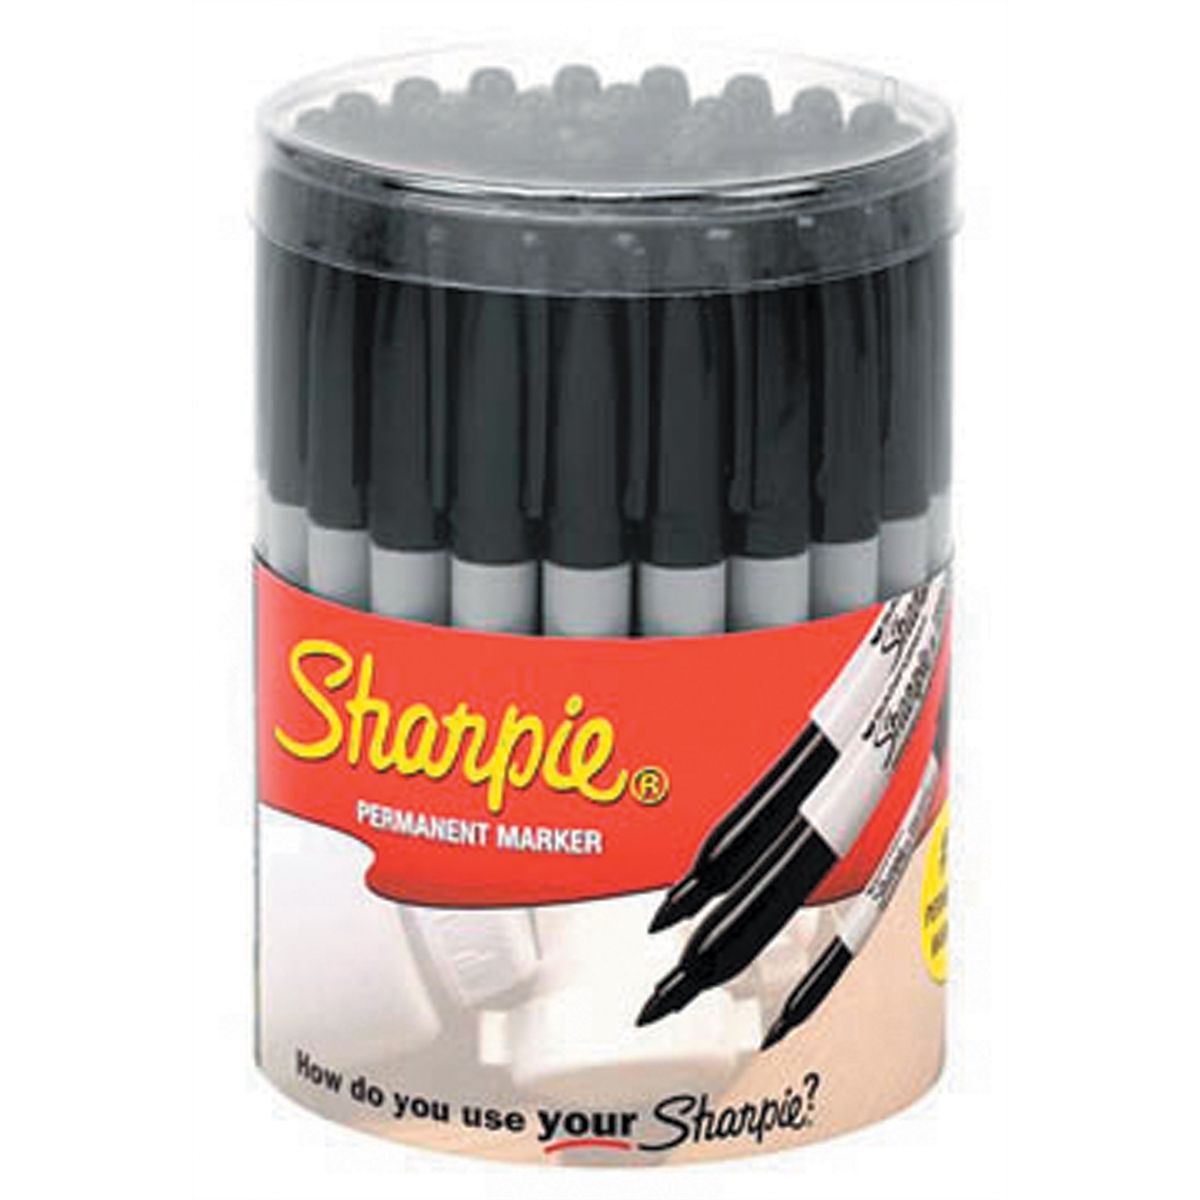 Sharpie Permanent Marker - Black - 36-Pc